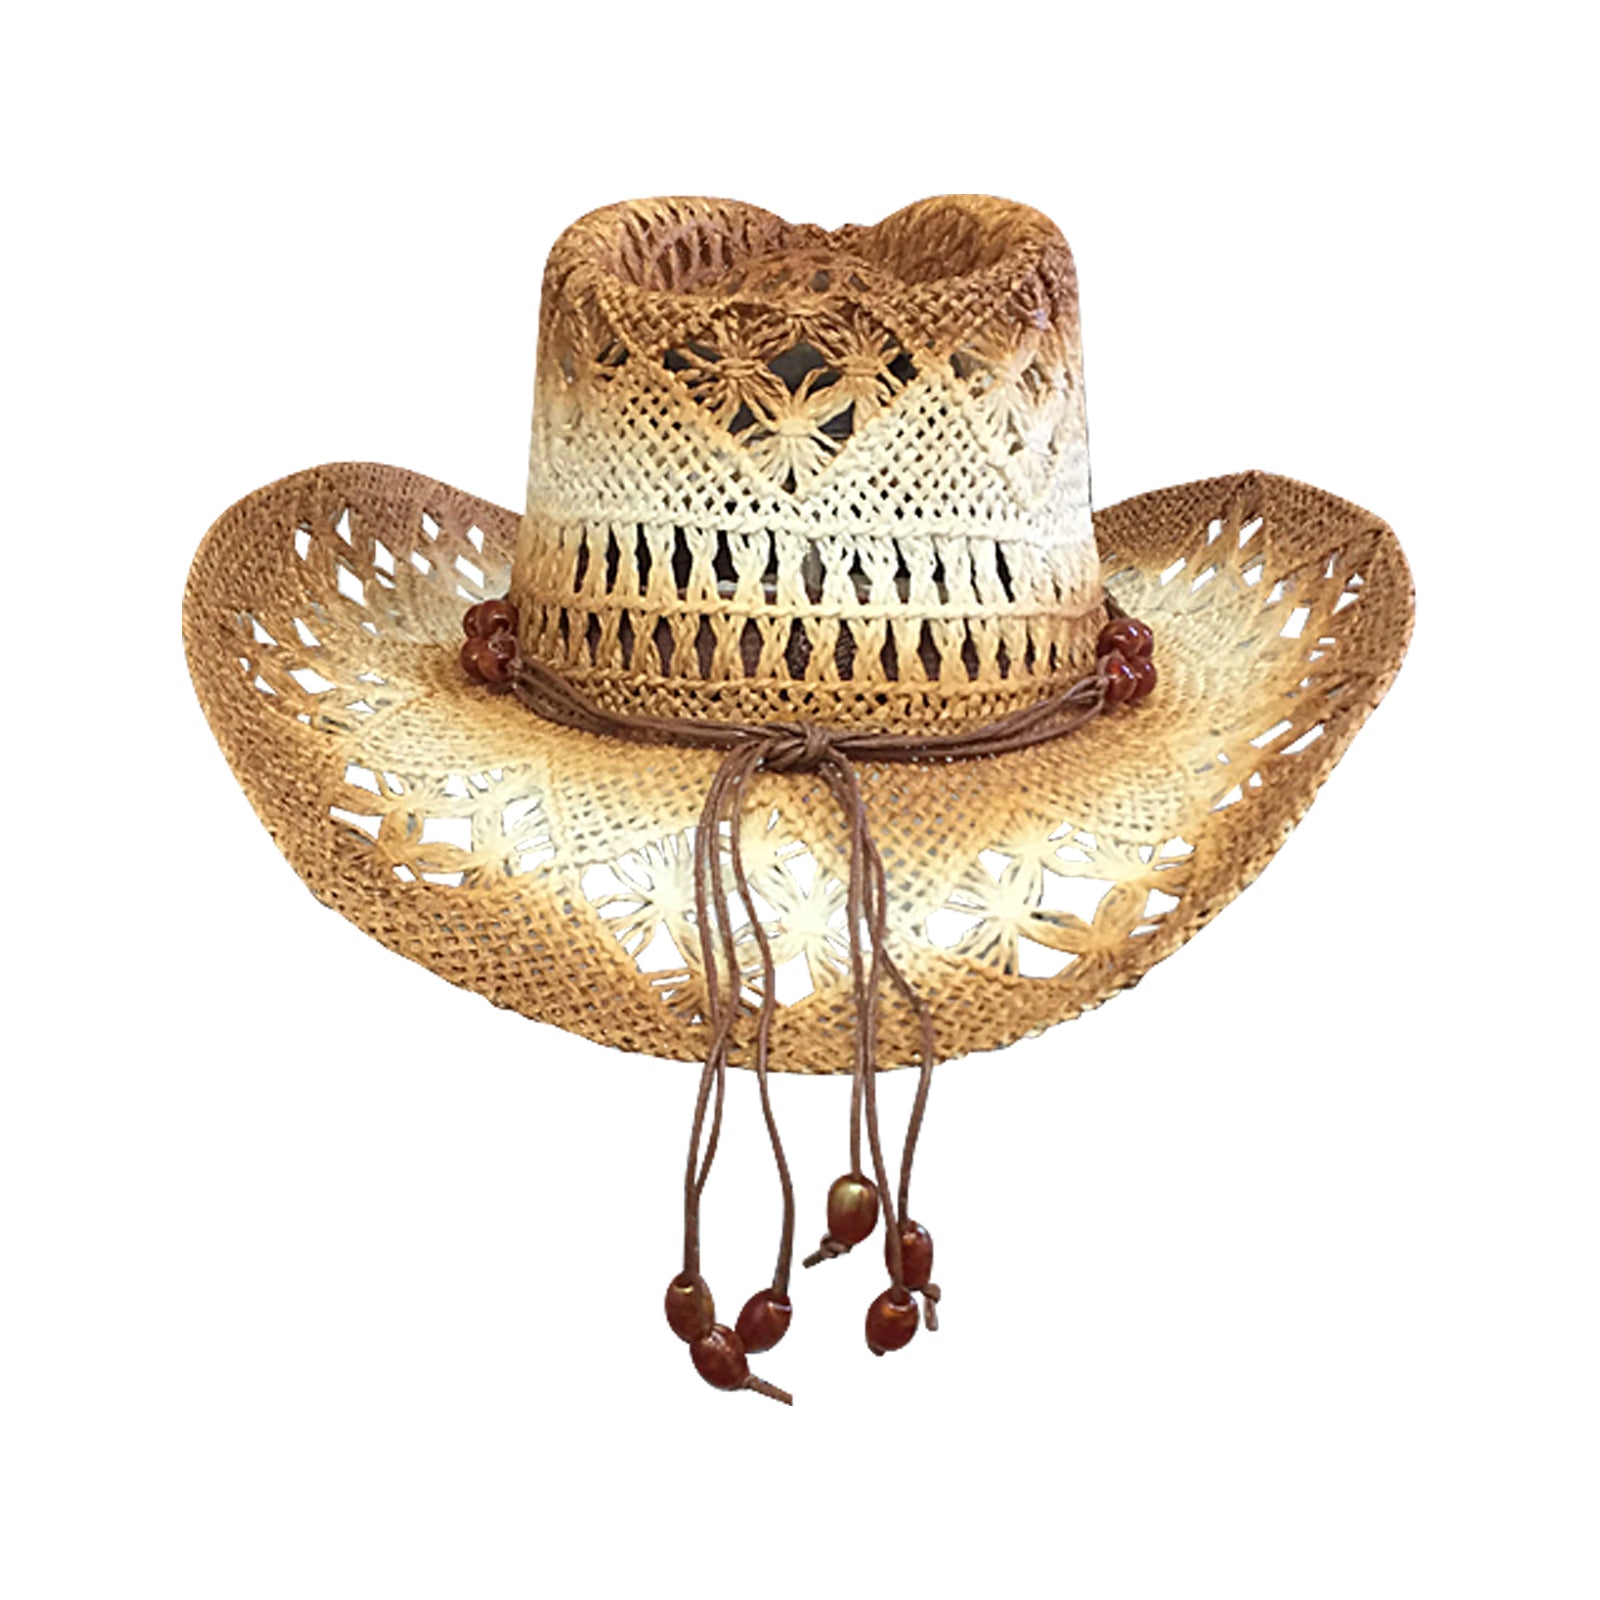 Raffia Straw 2-Tone Pinch Western Cowboy Hat with Beaded Band - Rockmount